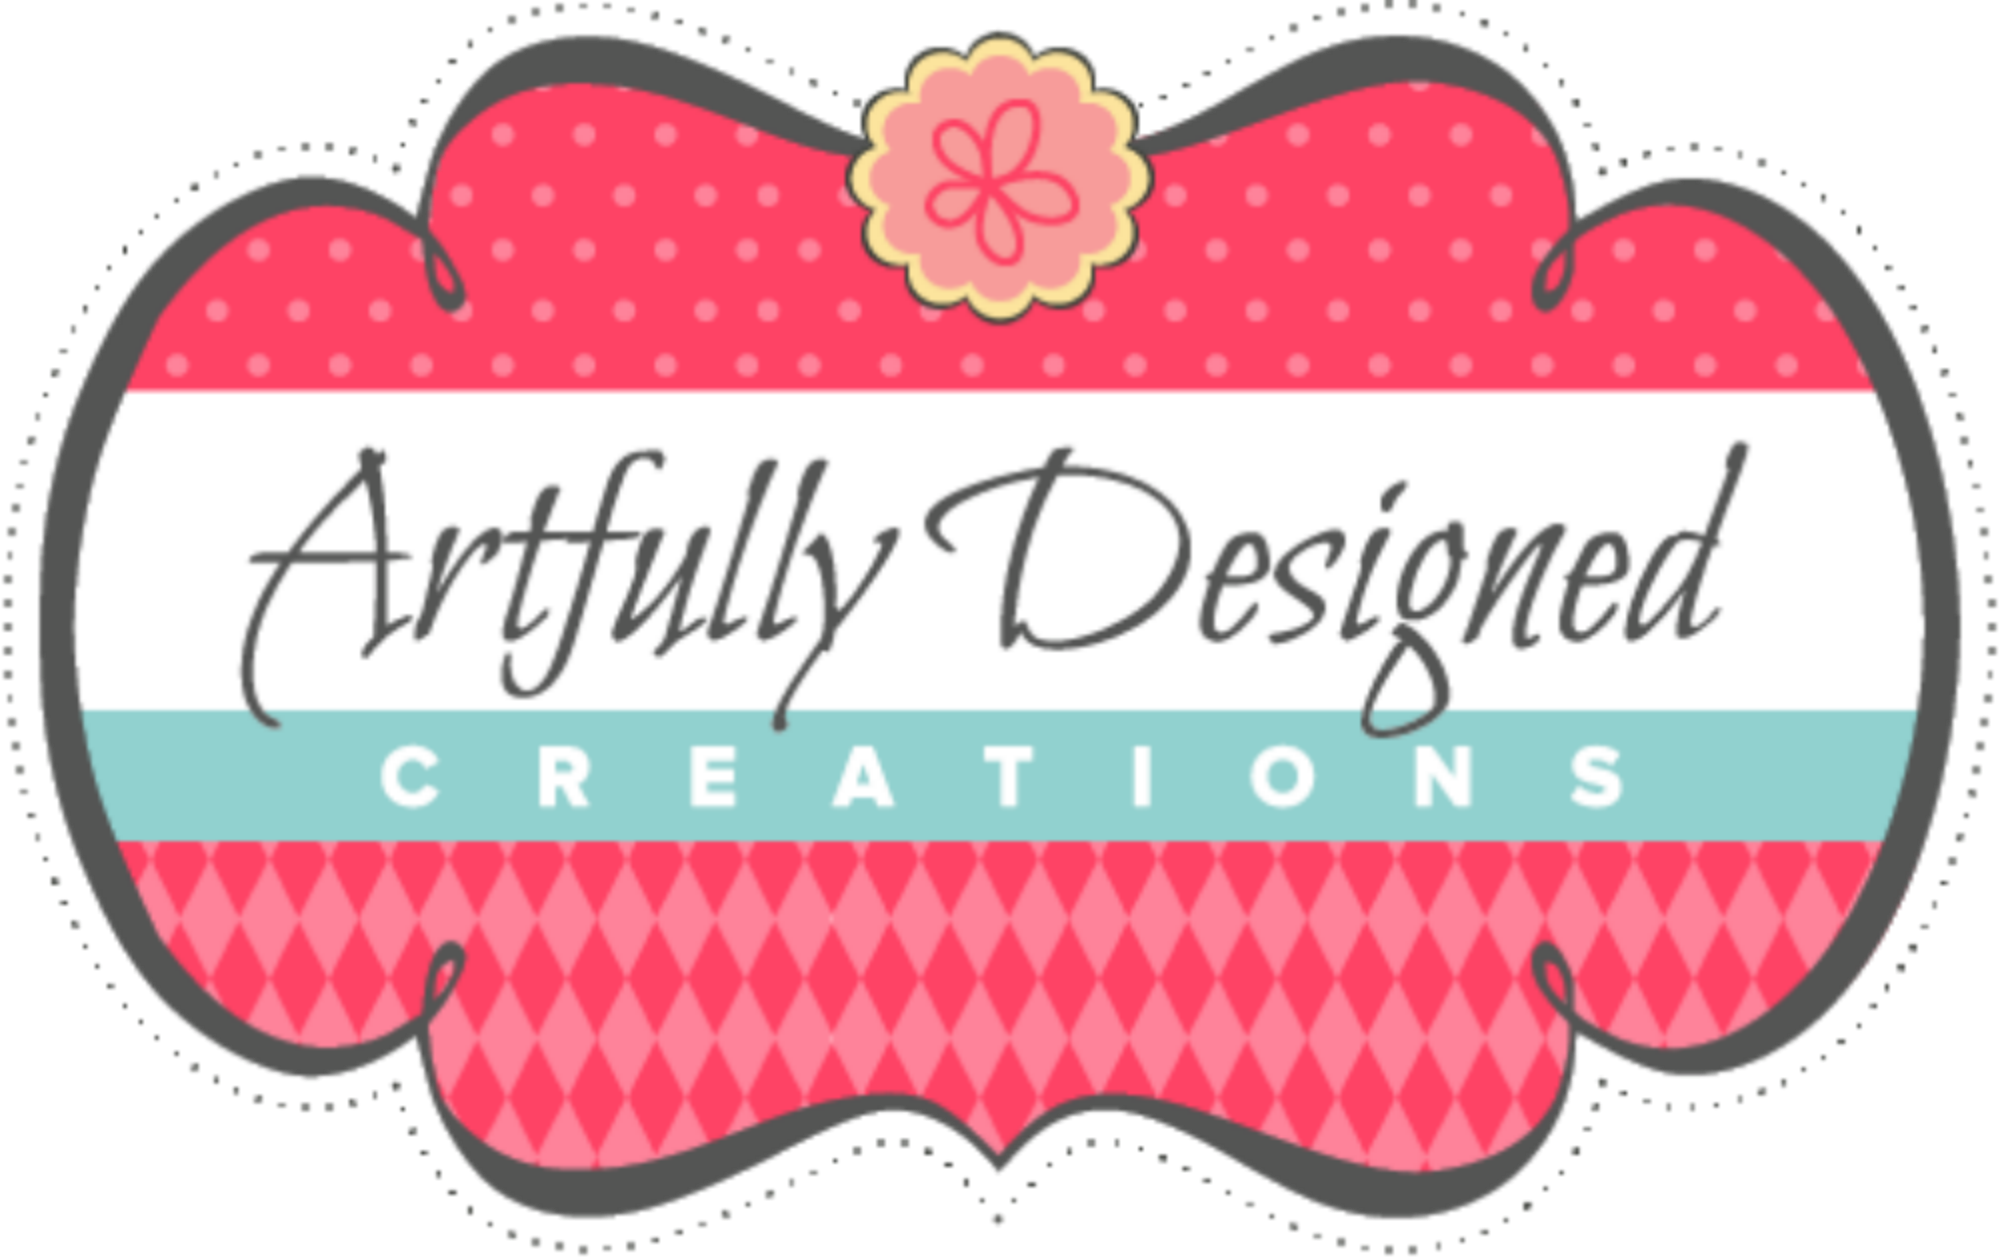 Artfully Designed Creations macbookLogo Enlarged.png